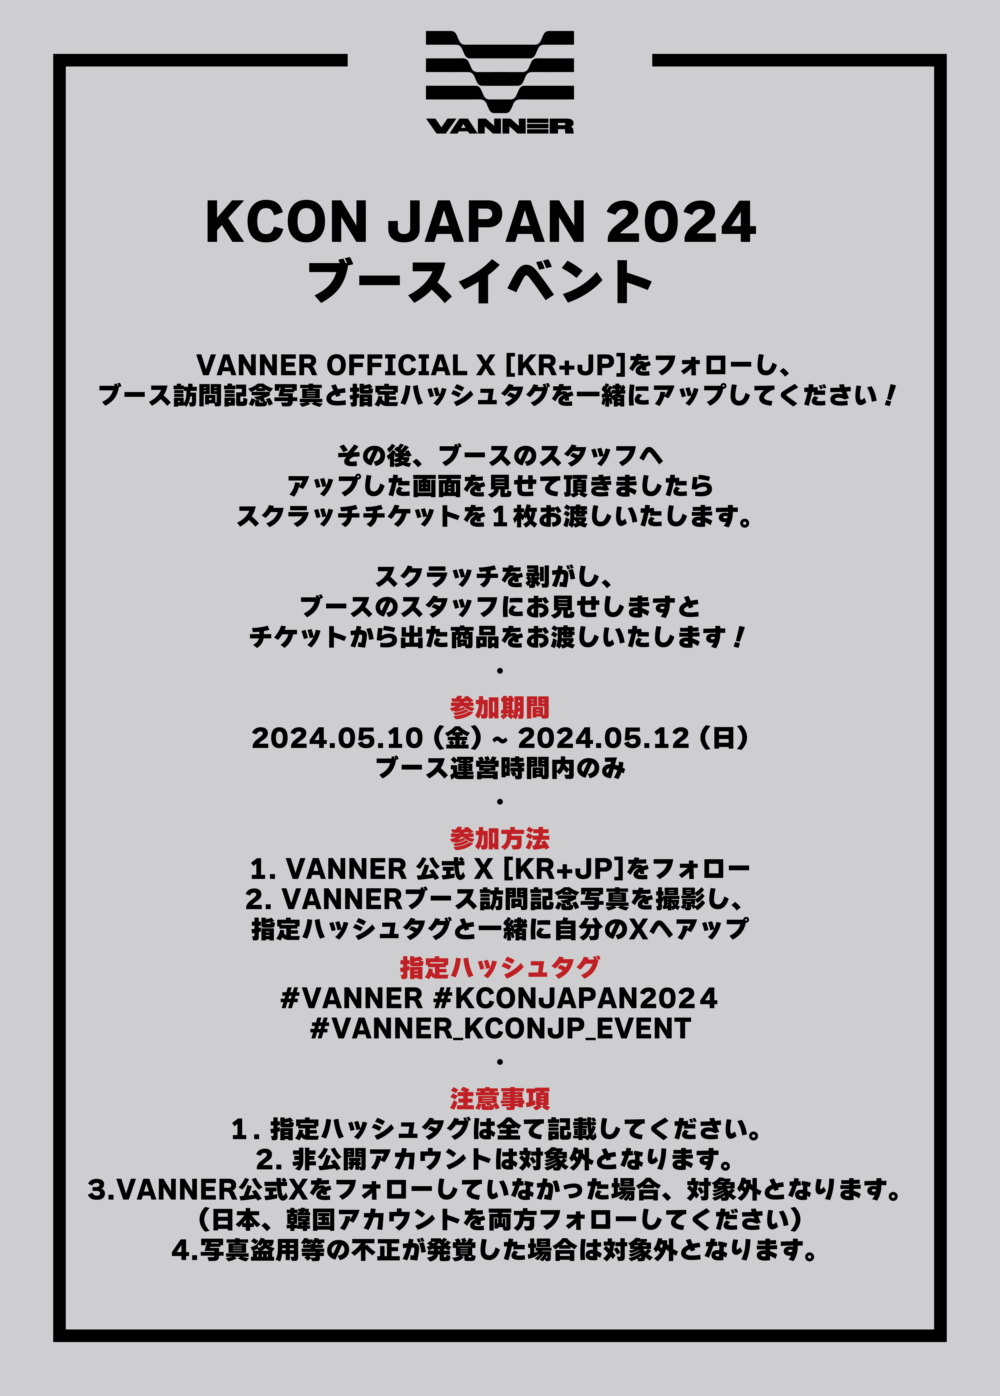 VANNER(ベナー) KCON JAPAN 2024 ブースイベントのご案内 - VANNER 